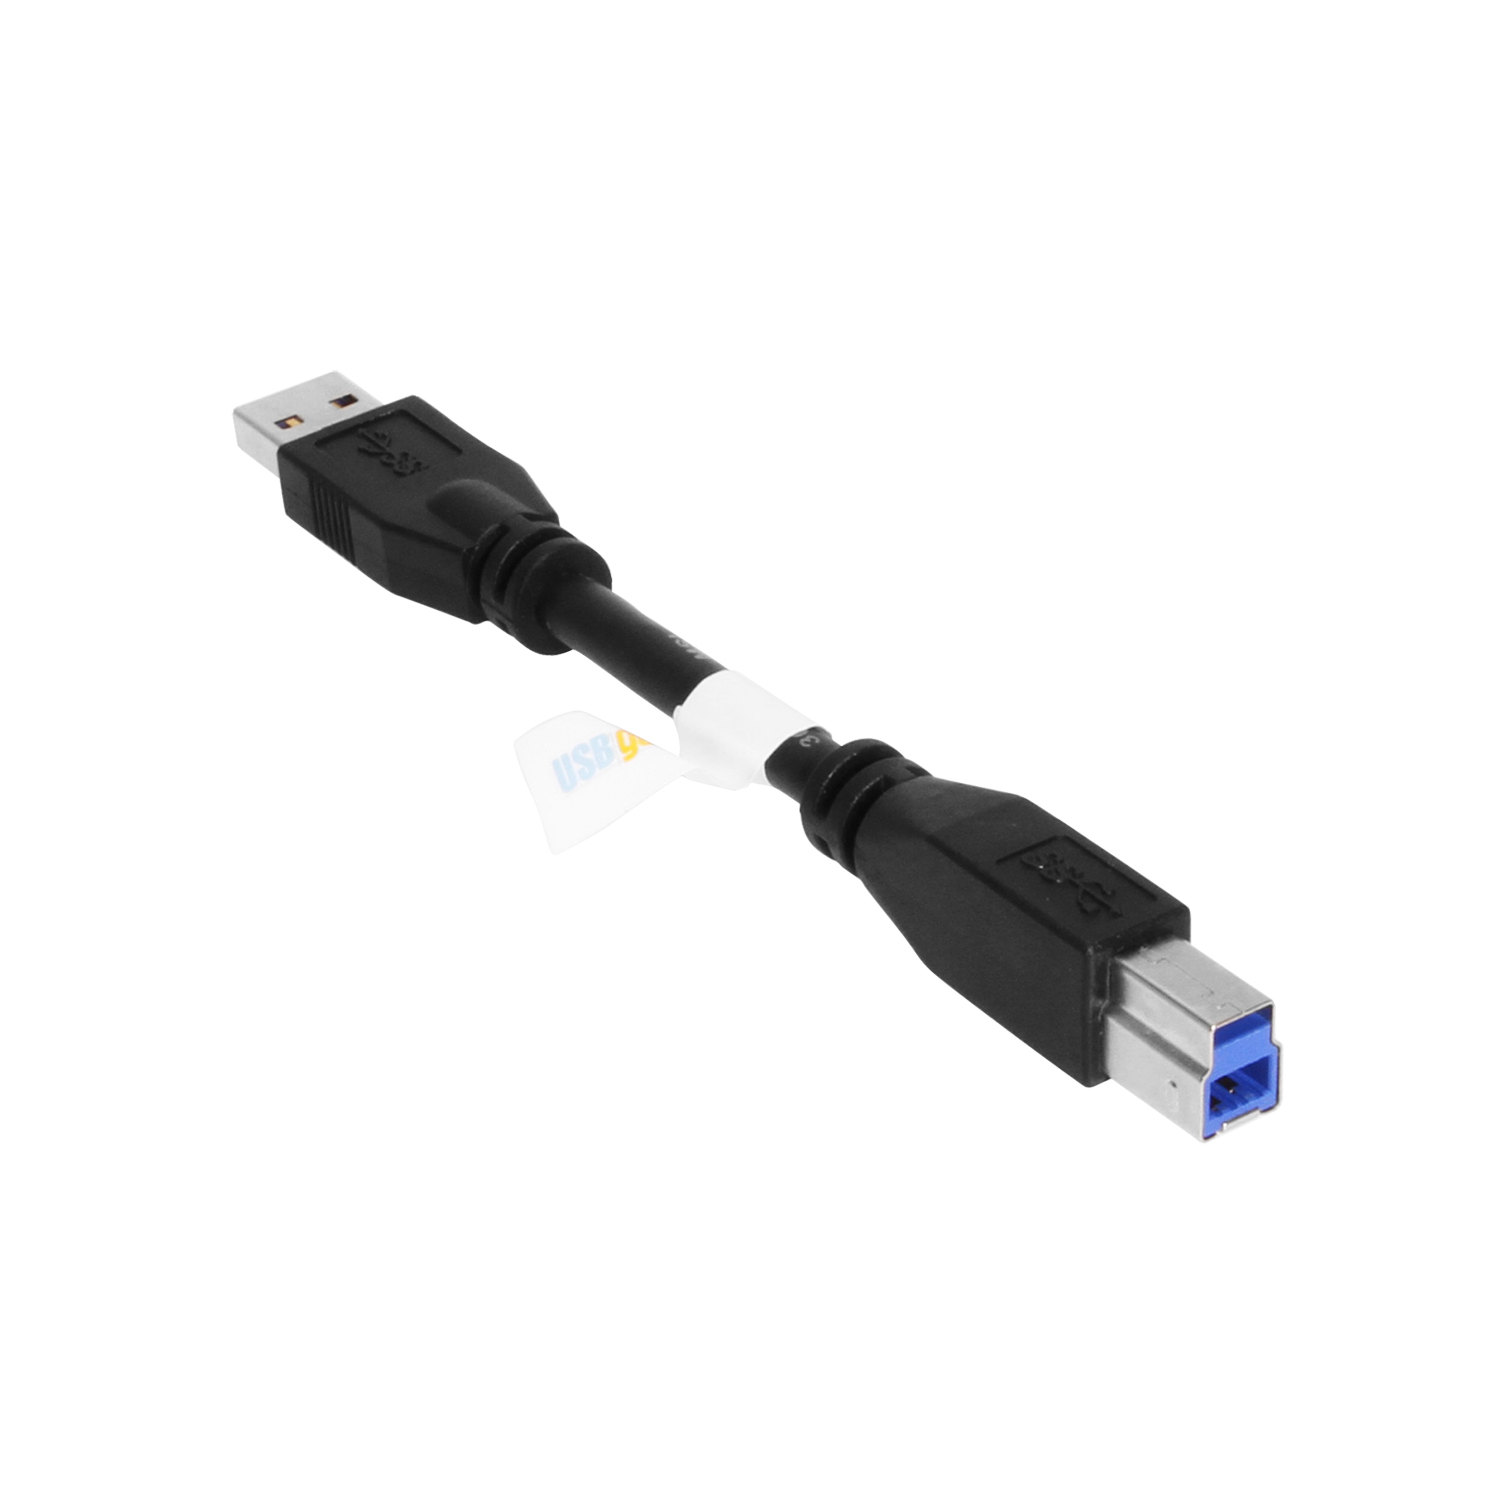 USB Hub Adapter High Durability Transfer Data ABS Phone OTG Host